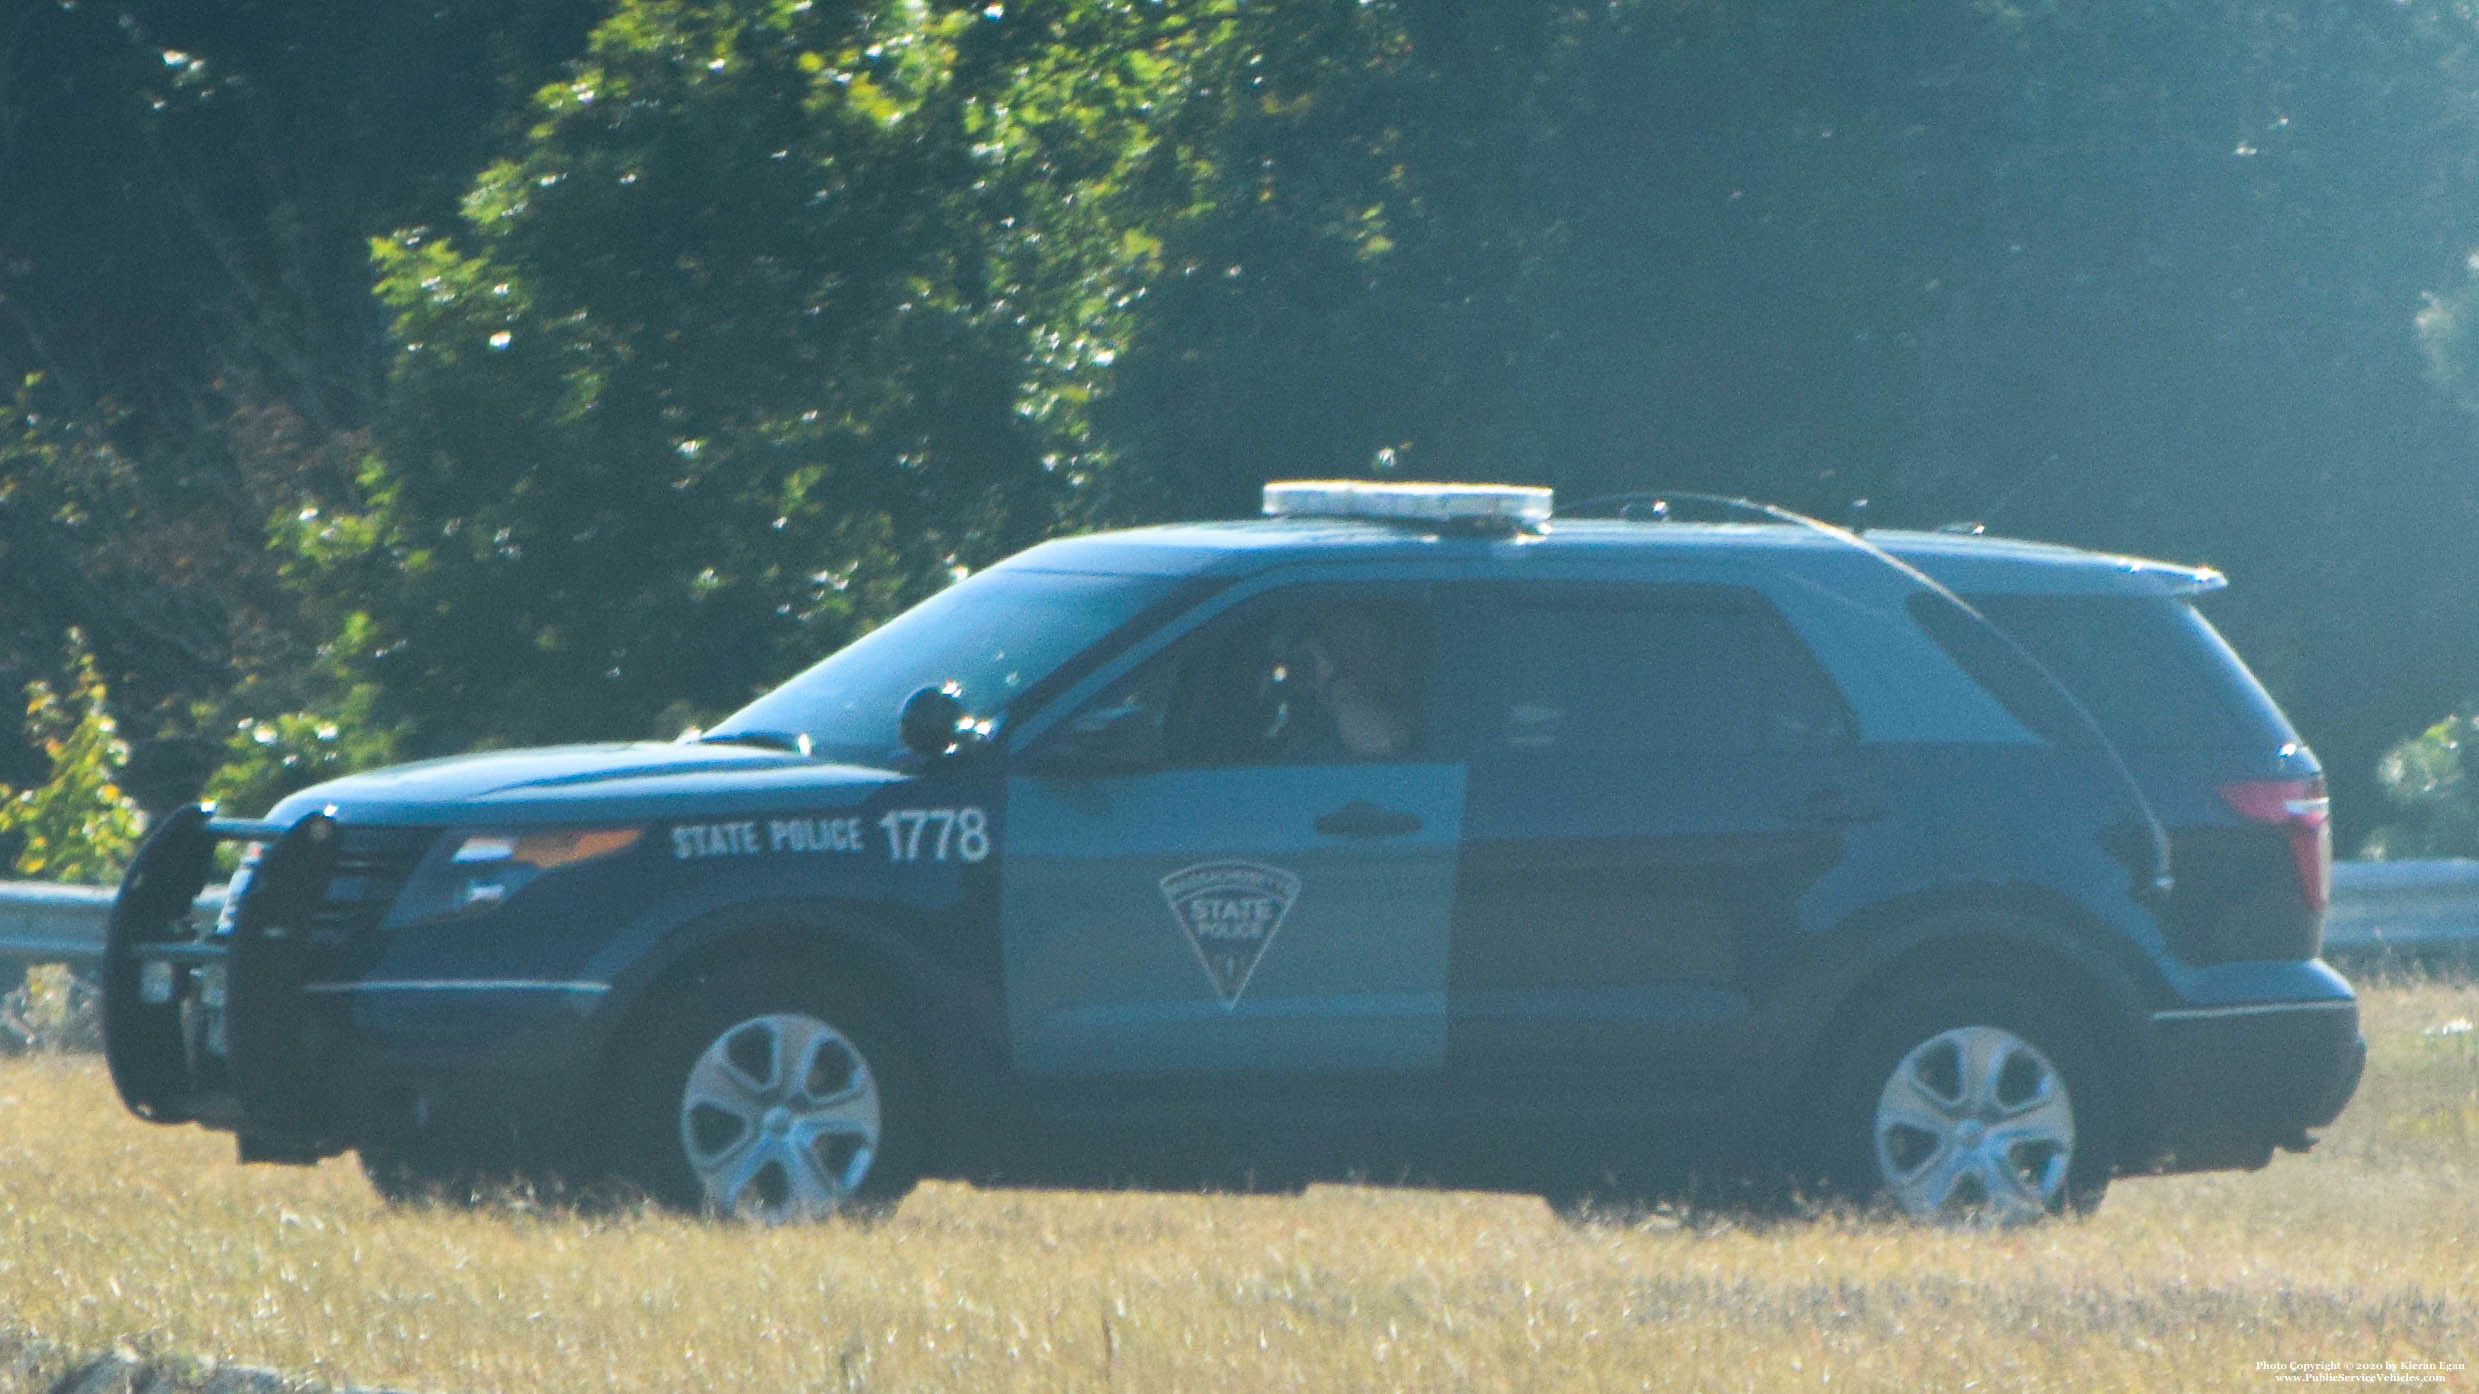 A photo  of Massachusetts State Police
            Cruiser 1778, a 2015 Ford Police Interceptor Utility             taken by Kieran Egan